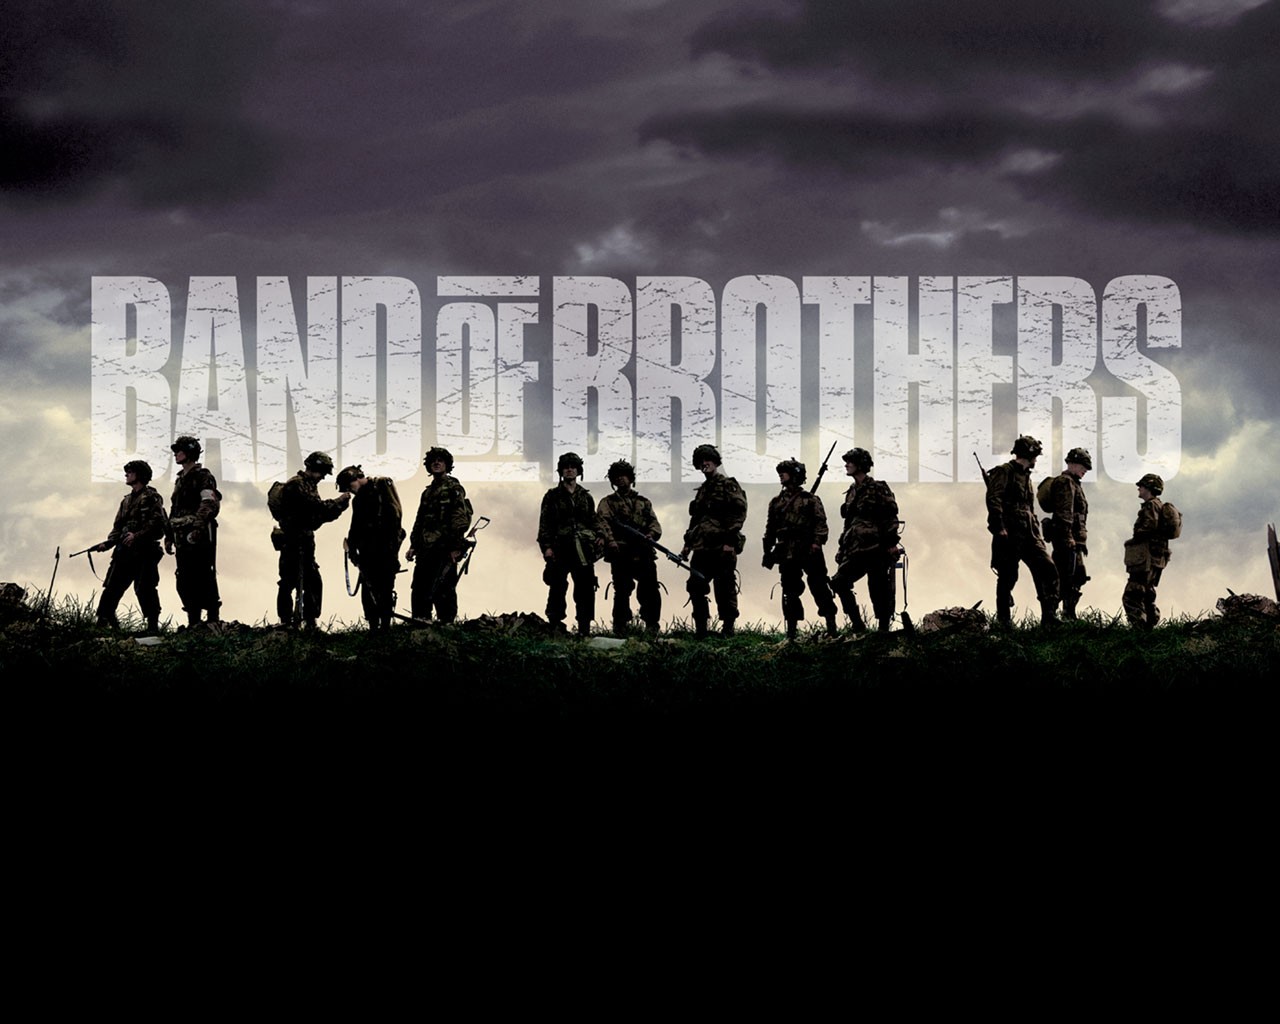 19+] Band of Brothers Wallpaper 1024x600 on WallpaperSafari